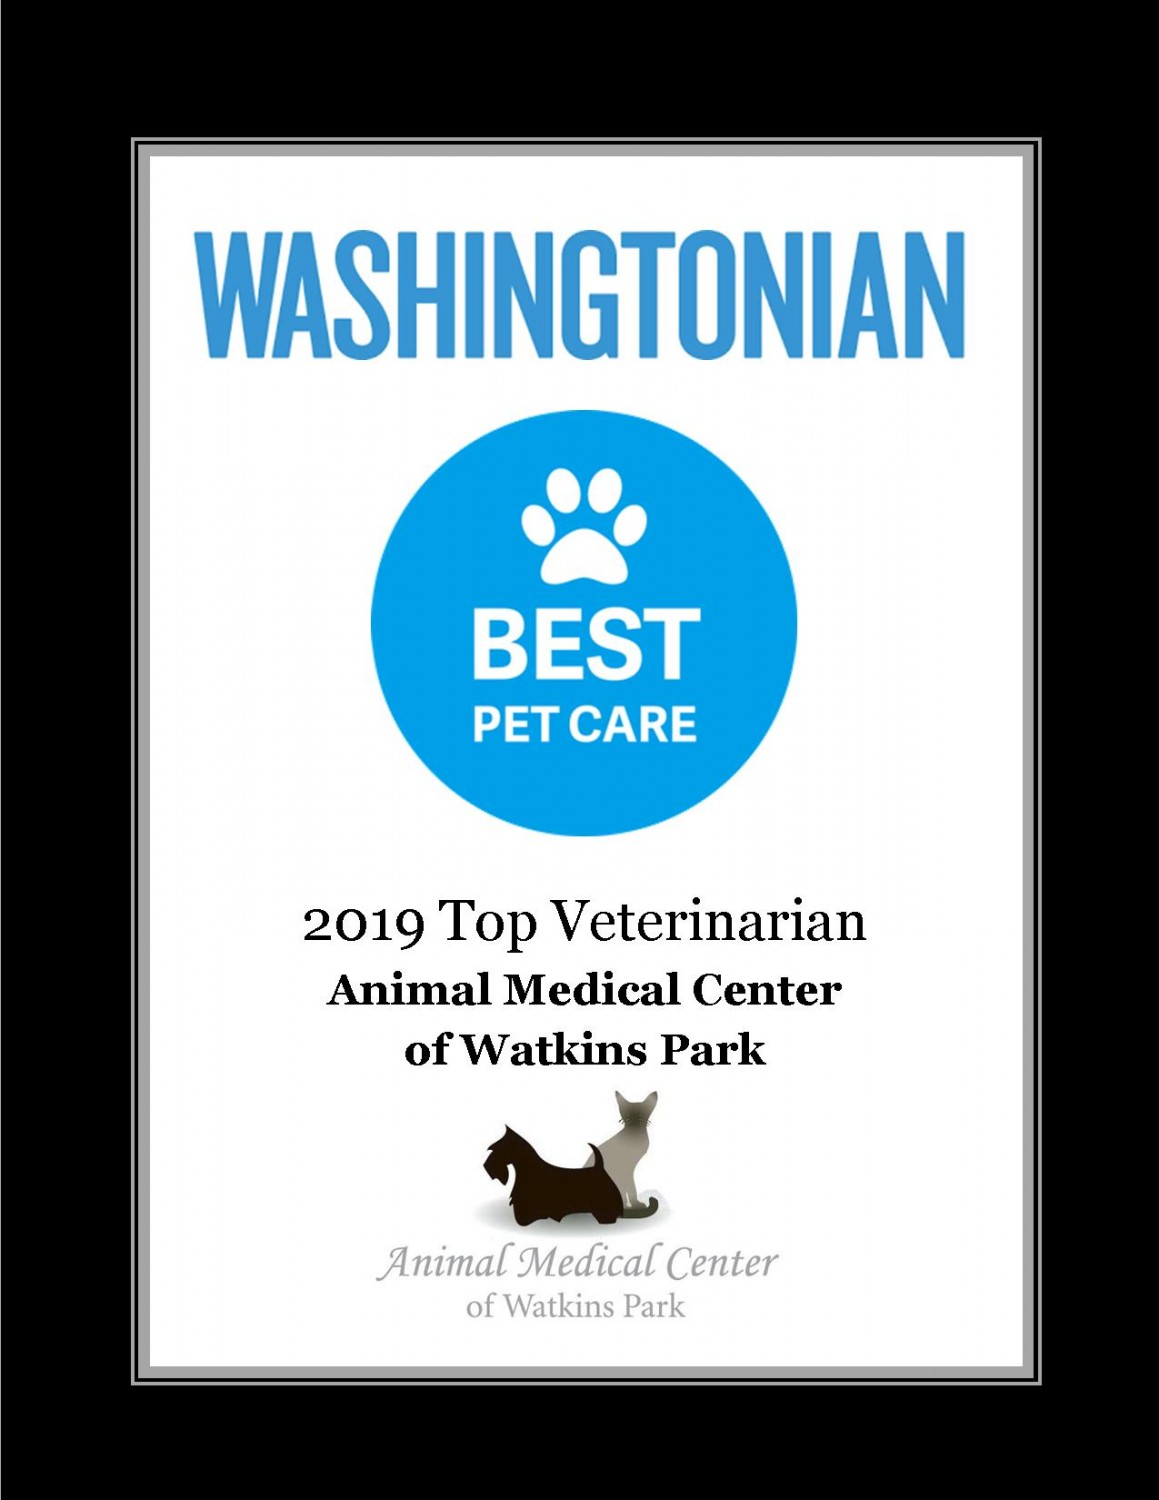 Washingtonian Top Veterinarian 2019 Award